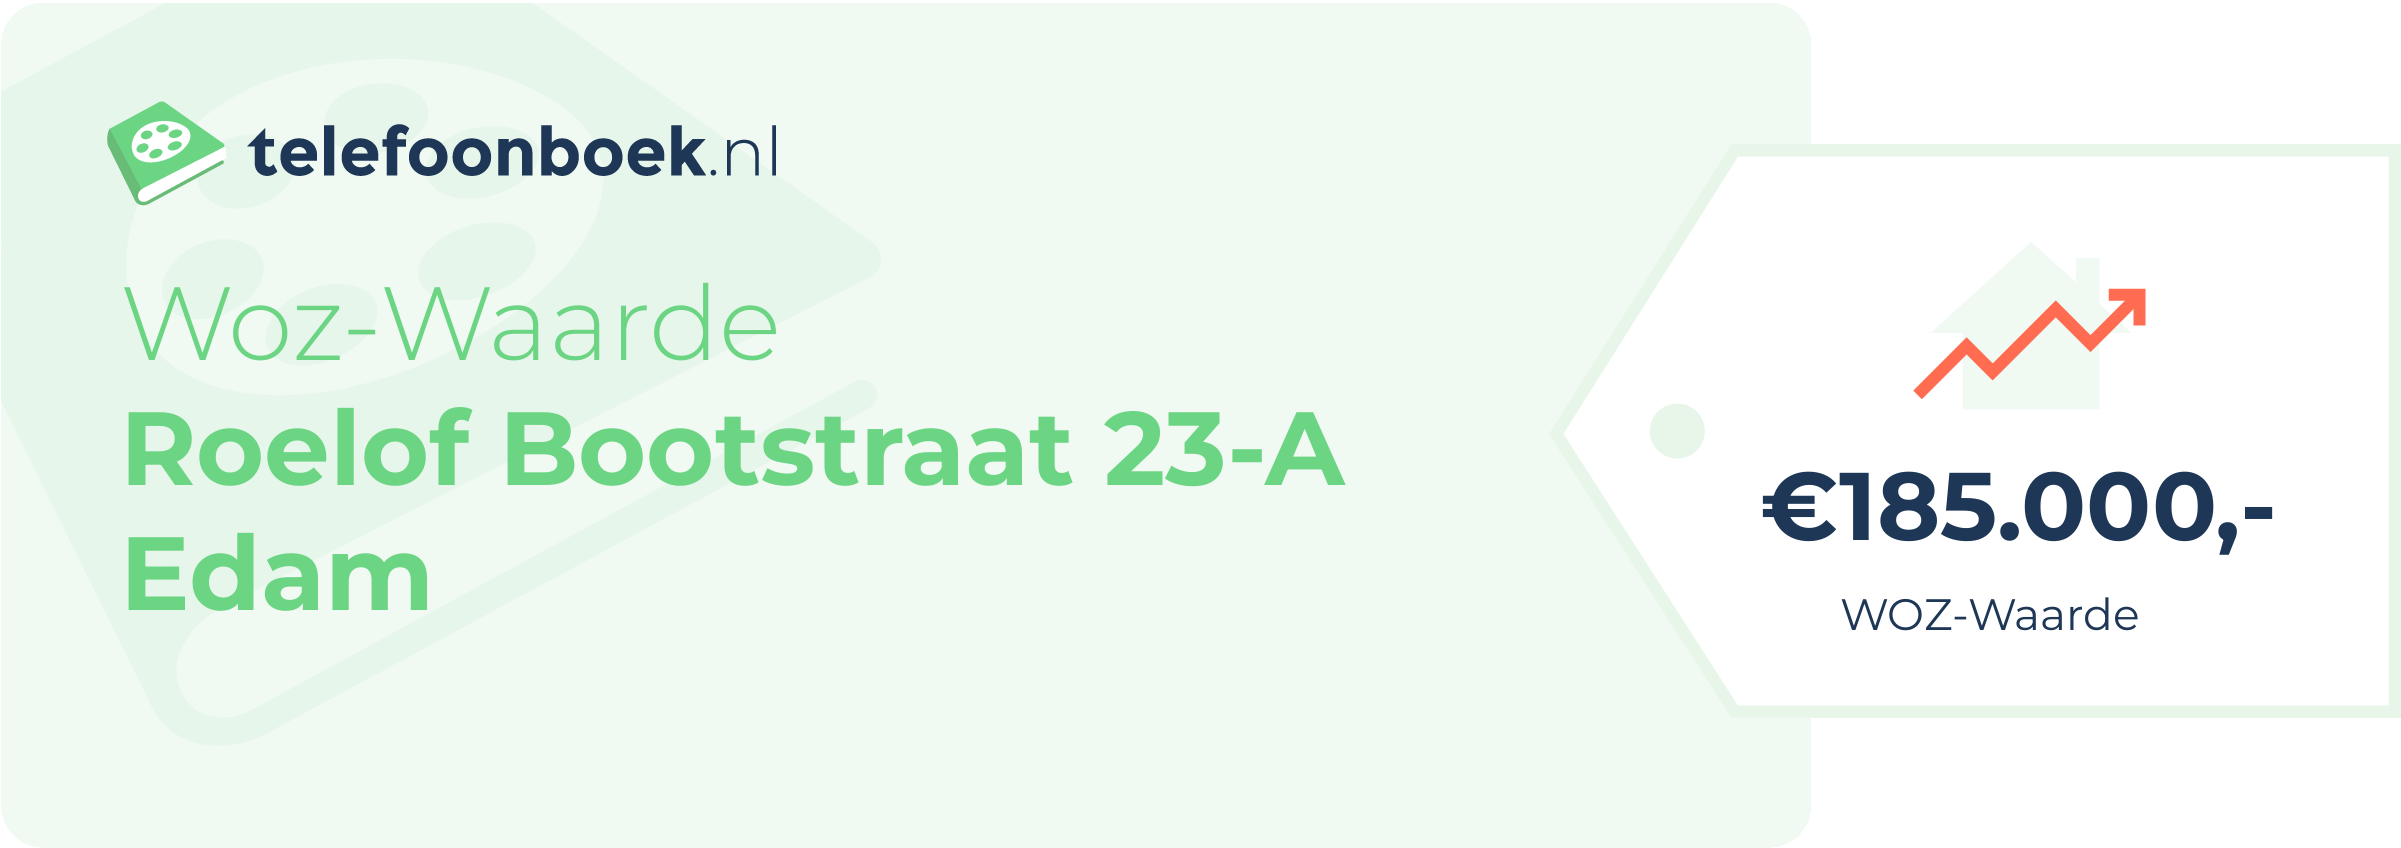 WOZ-waarde Roelof Bootstraat 23-A Edam